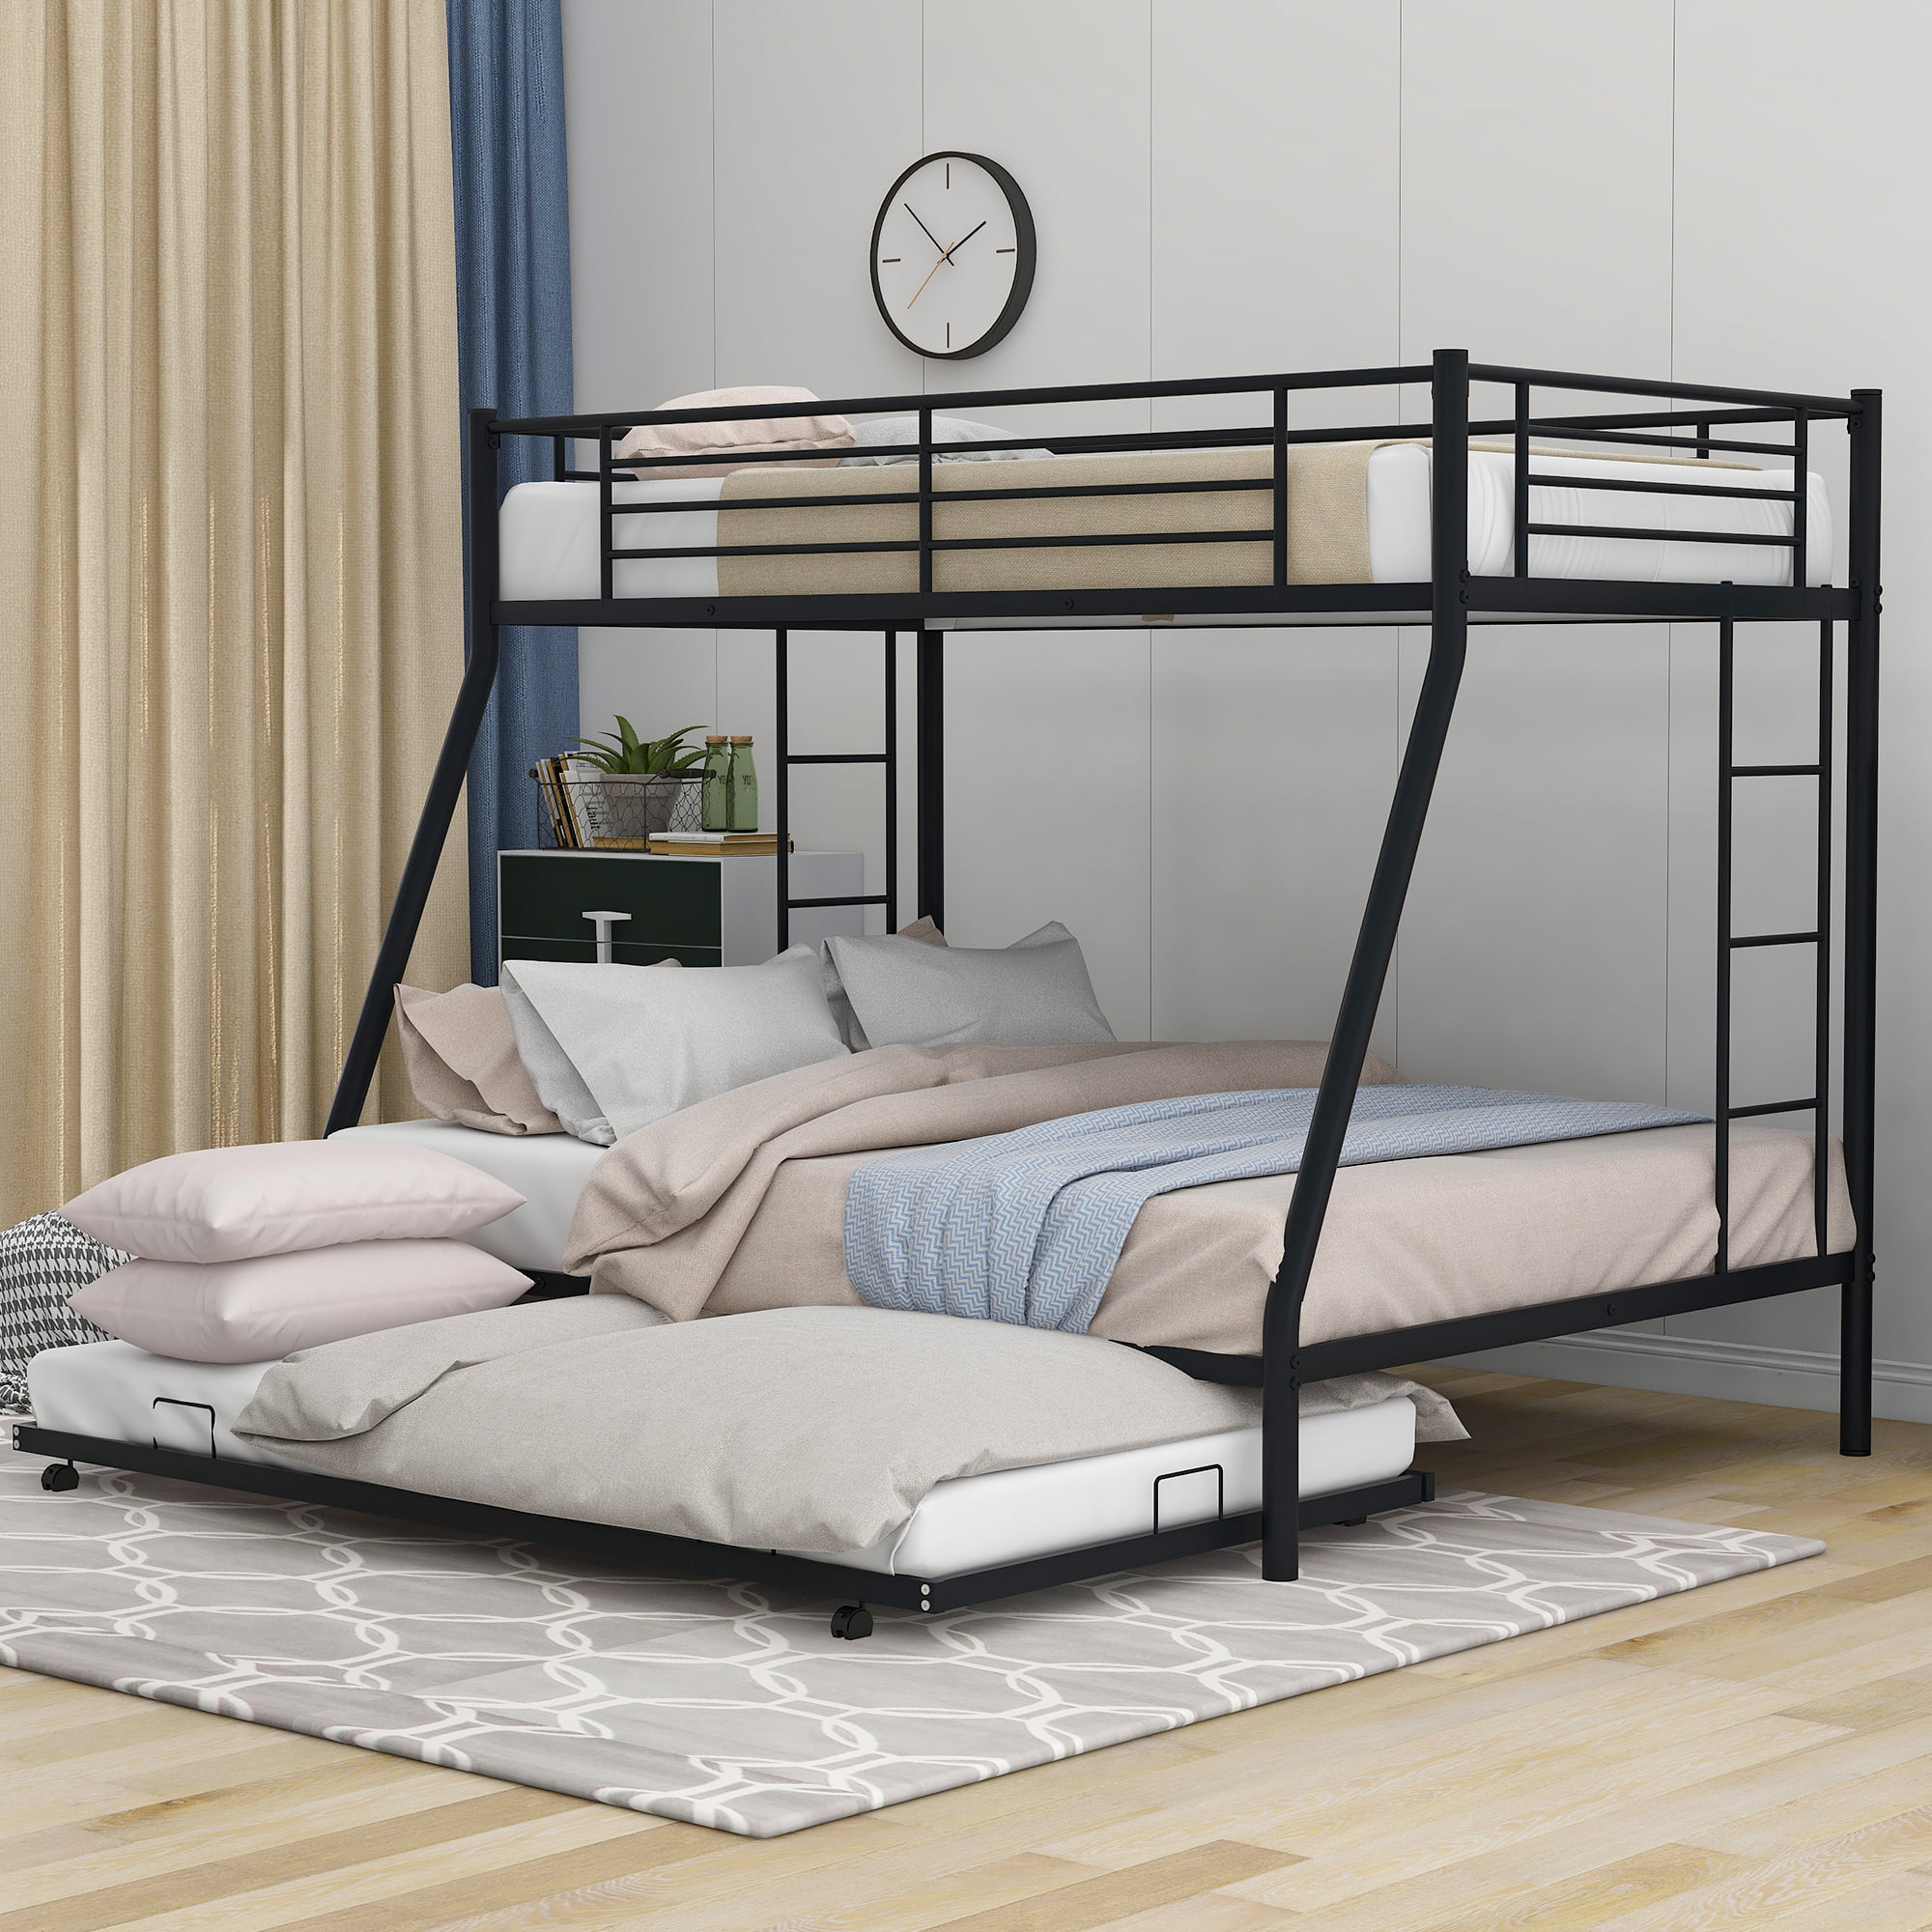 Euroco Steel Twin Over Full Bunk Bed, Bunk Bed Clock